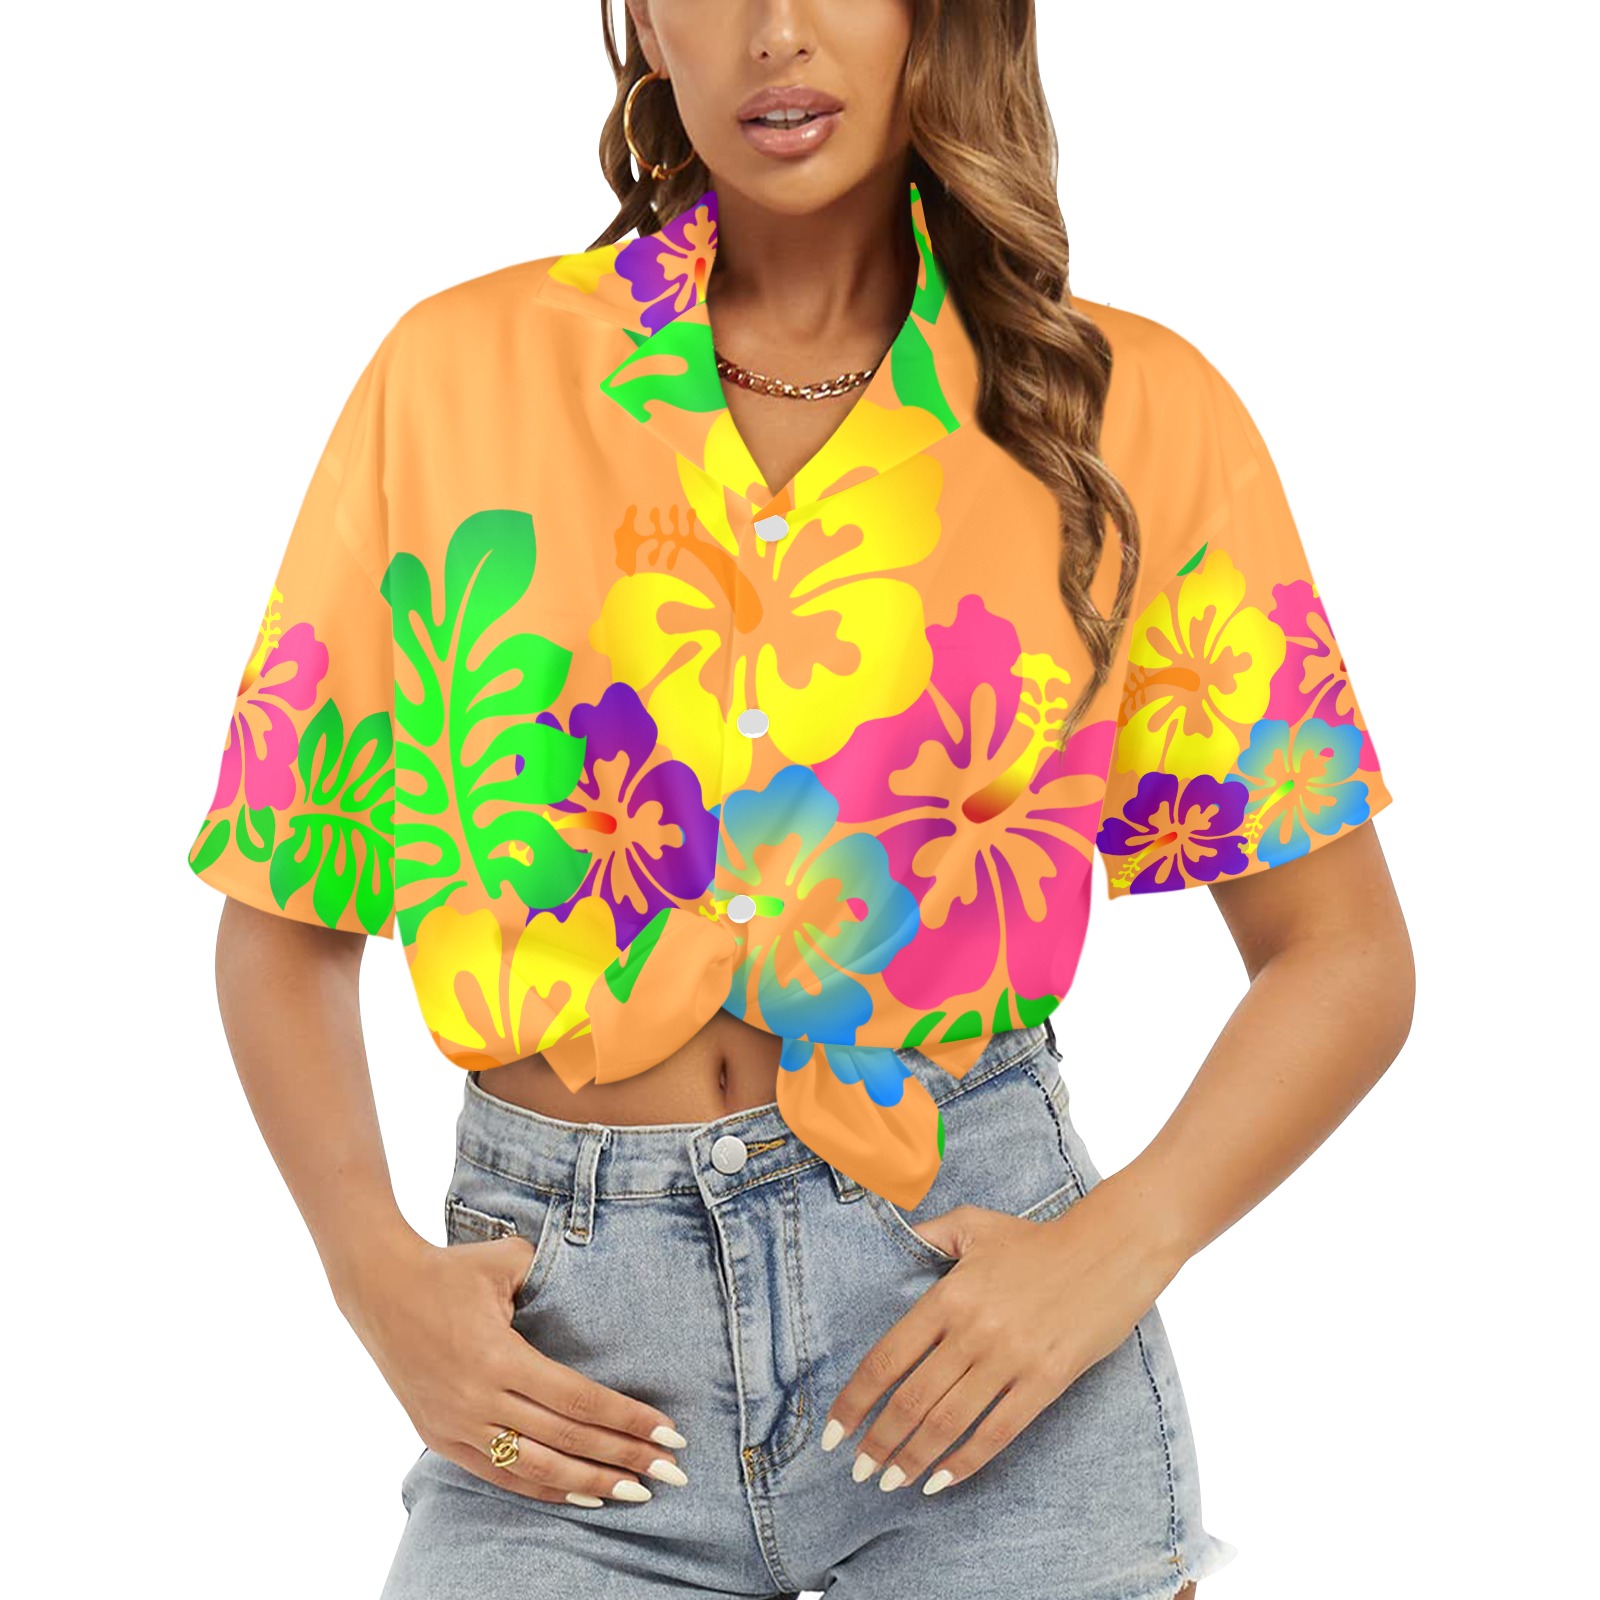 Hibiscus Hawaiian Flowers - Peach Women's All Over Print Hawaiian Shirt (T58-2)